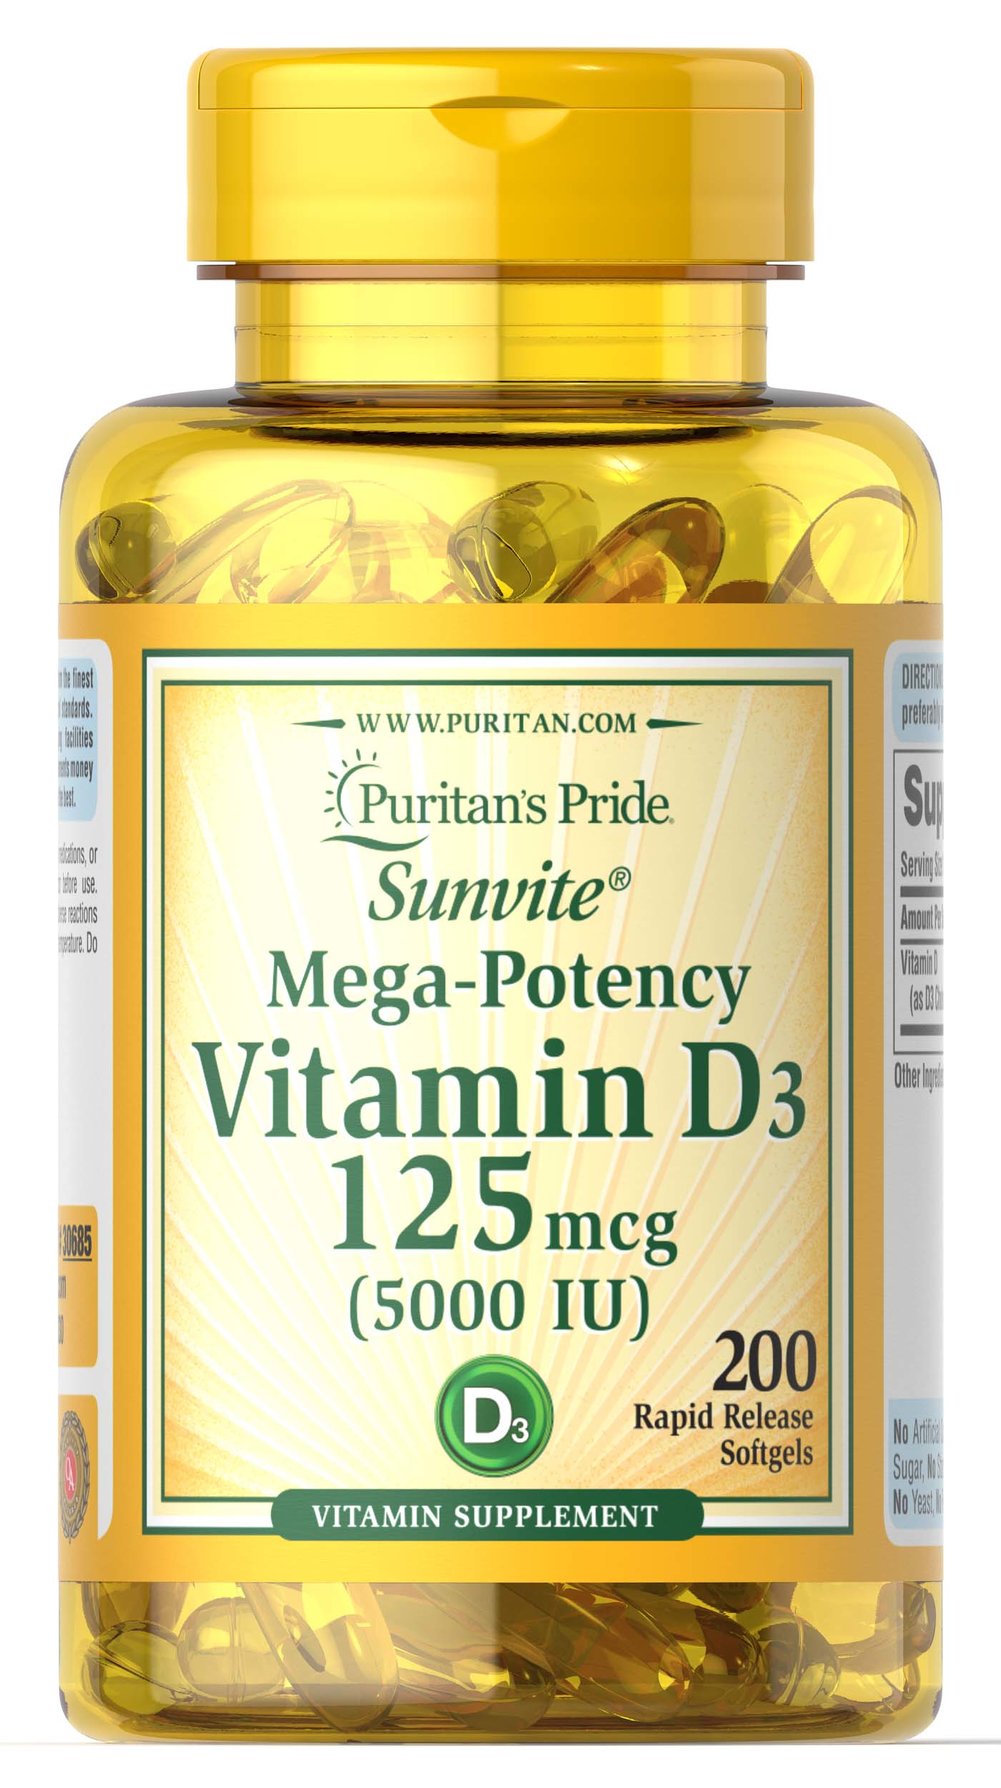 Puritan's Pride Vitamin D3